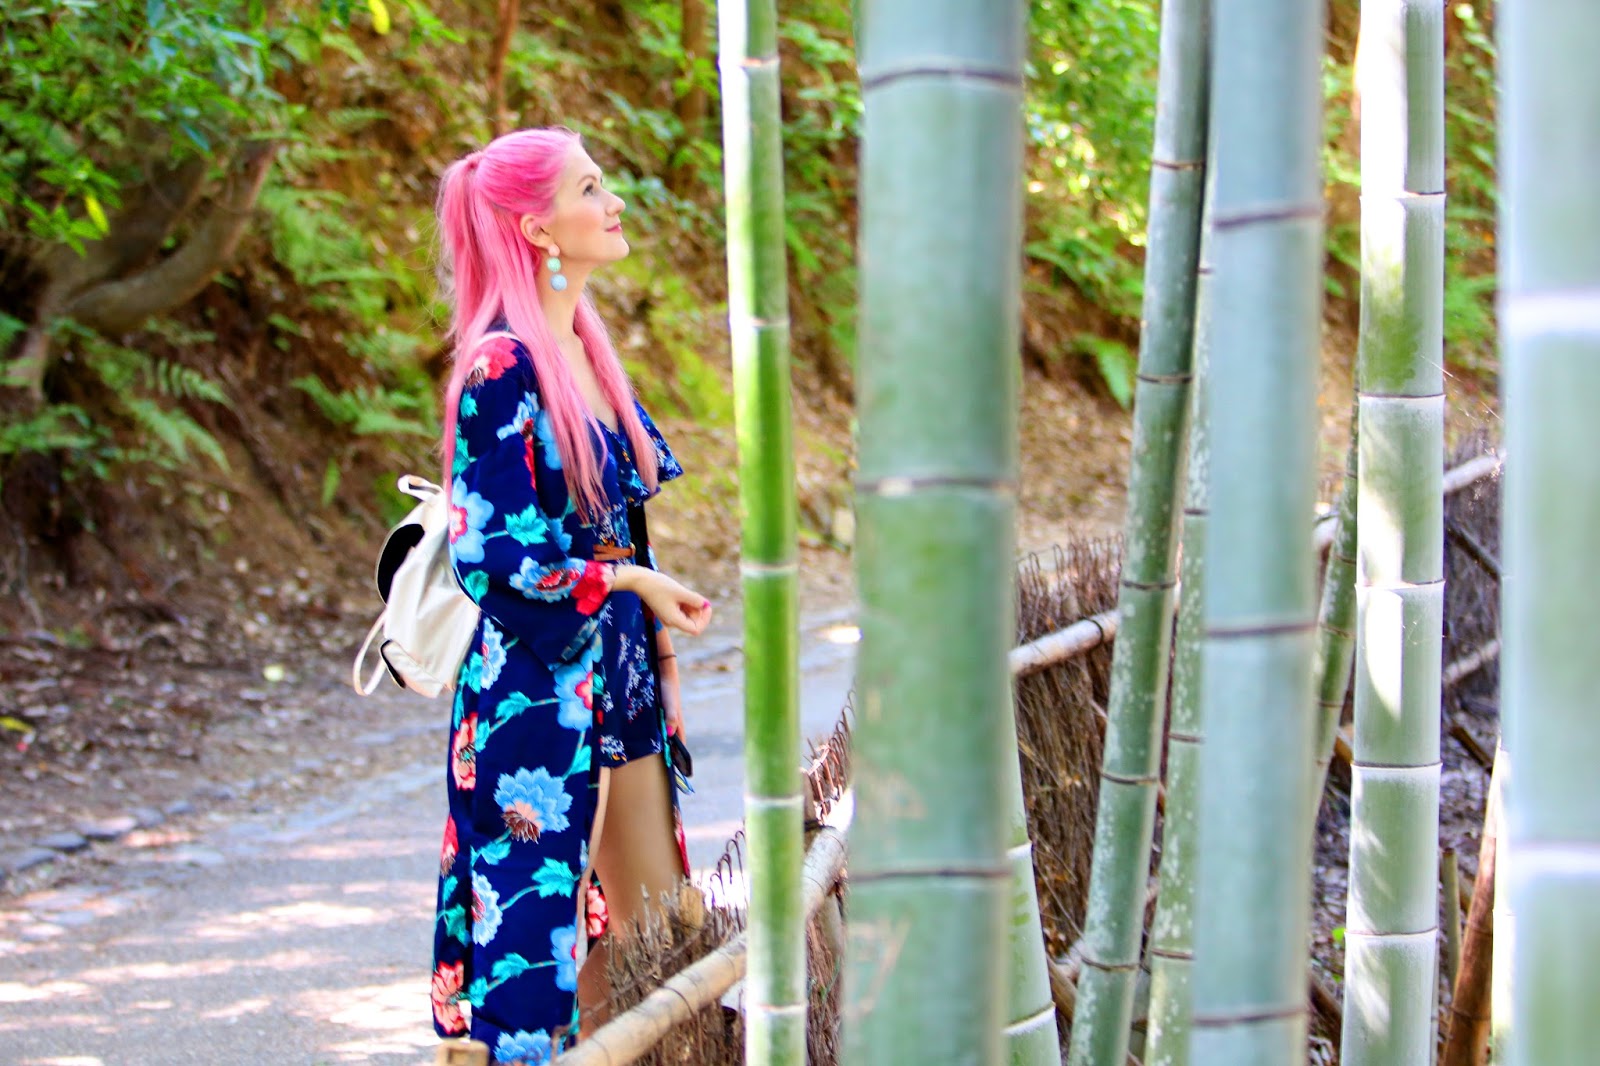 Vlog of the beautiful Bamboo forest in Arashiyama, Japan